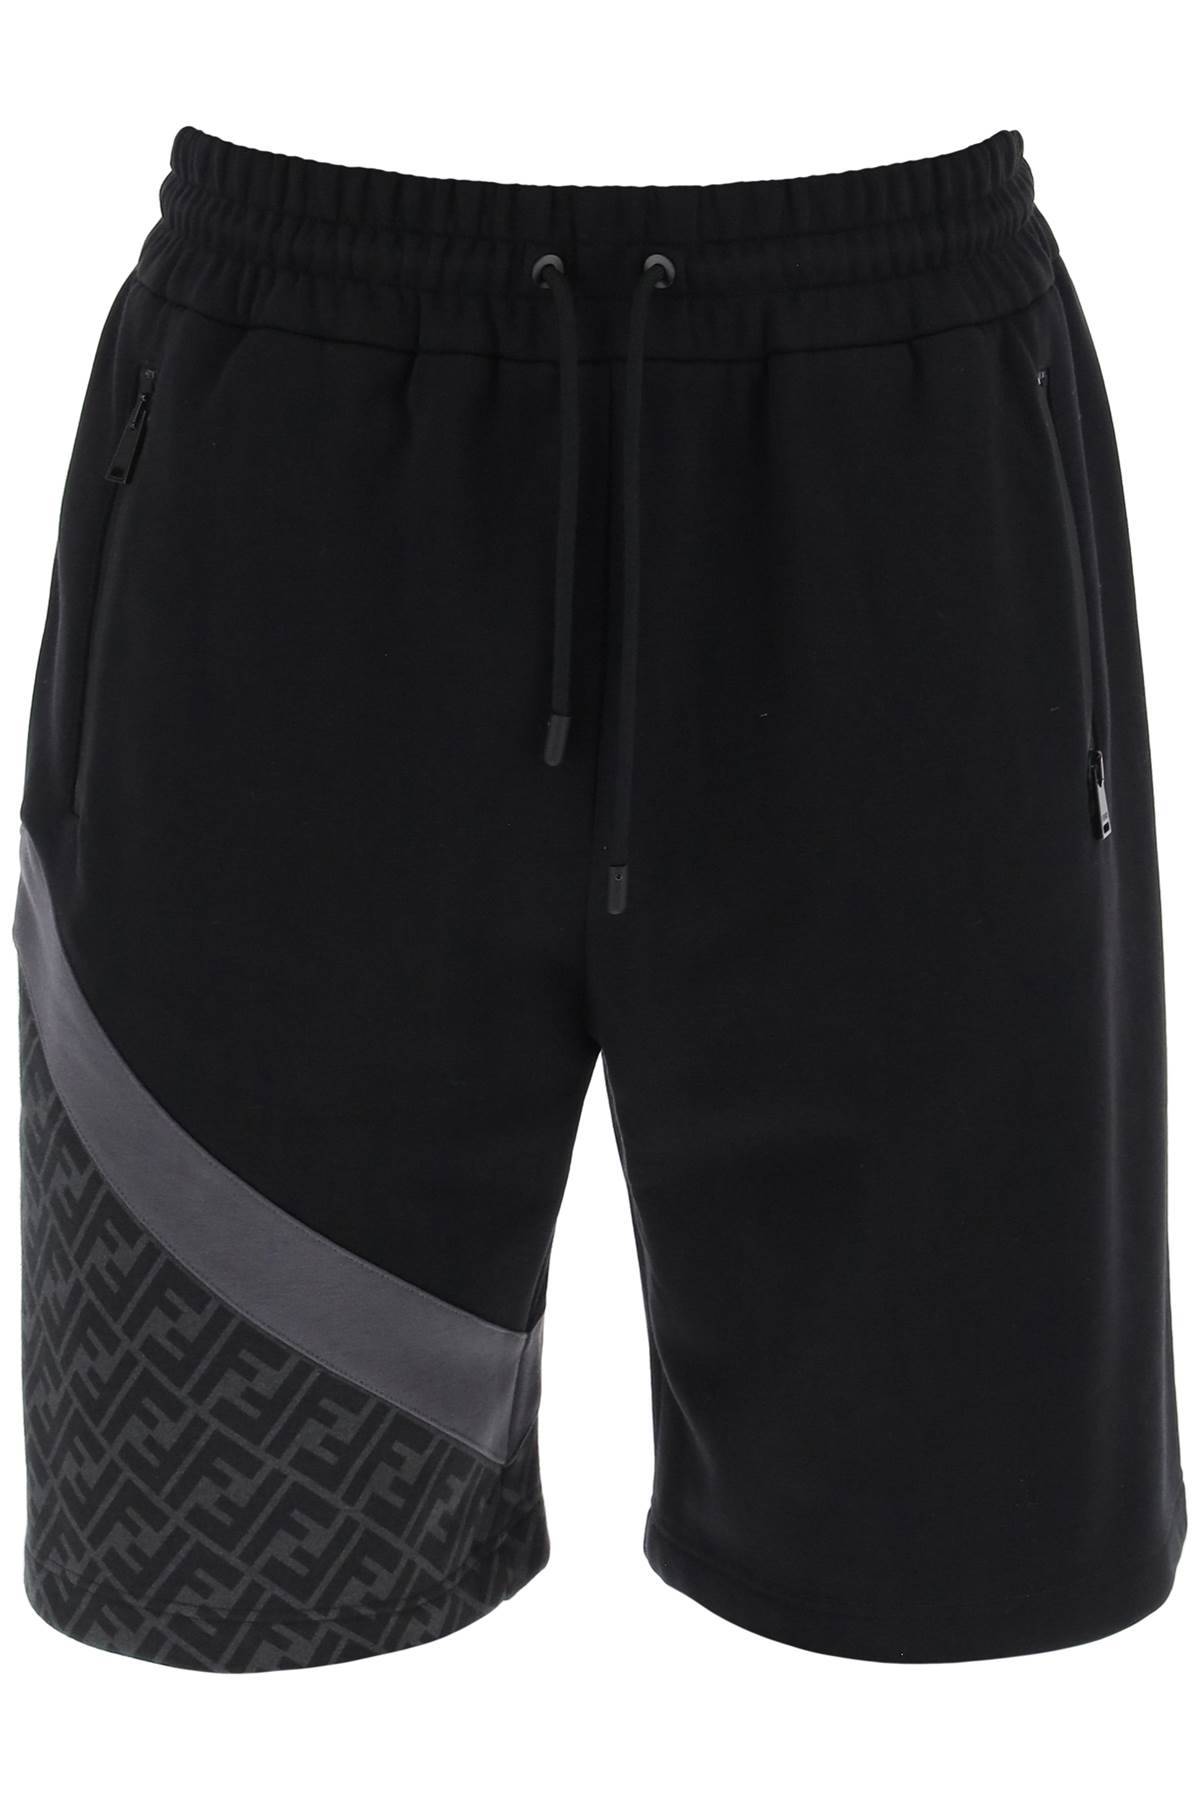 Fendi Sweatpants With Ff Insert In Black,grey